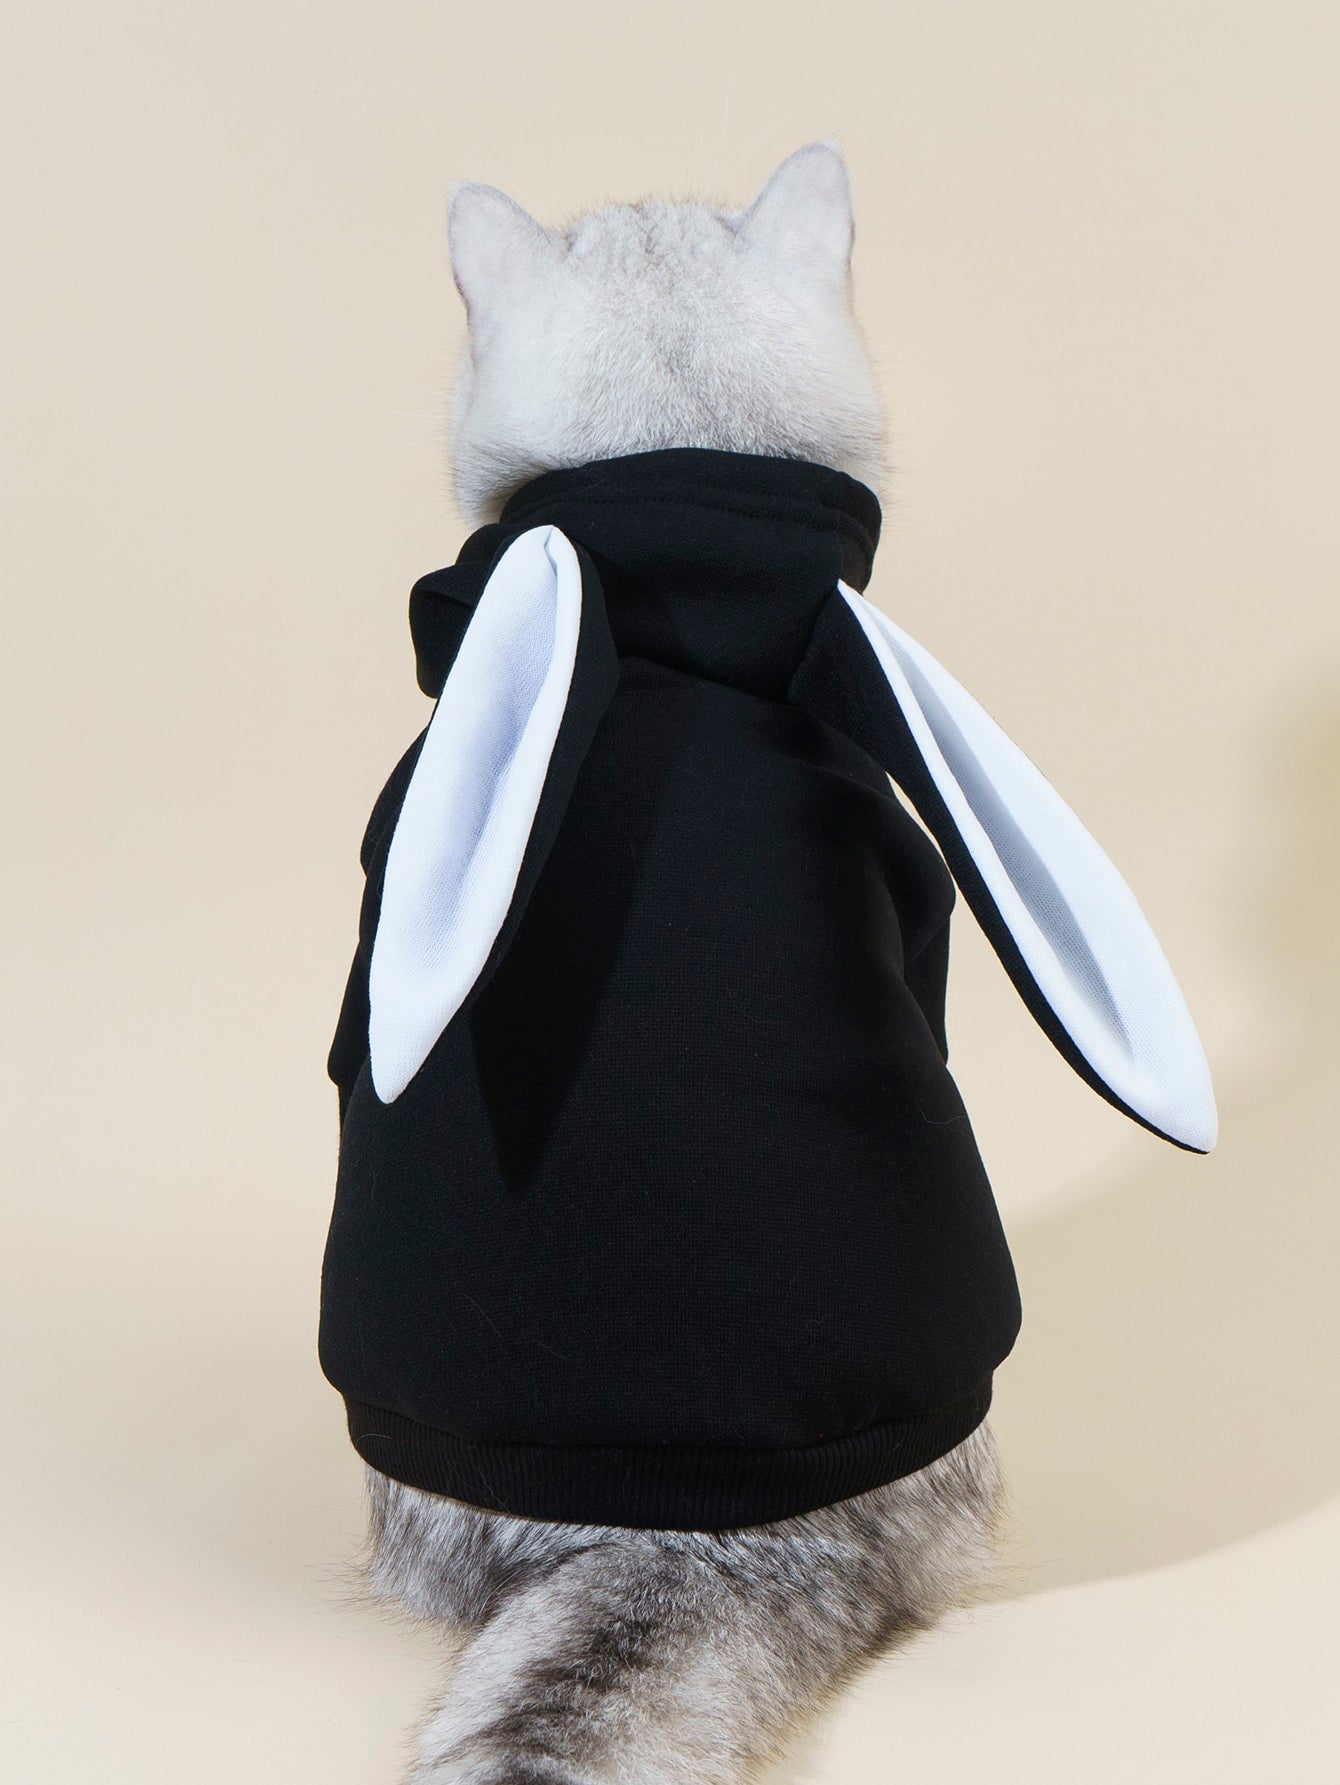 PETSIN Rabbit Ear Design Pet Hoodie